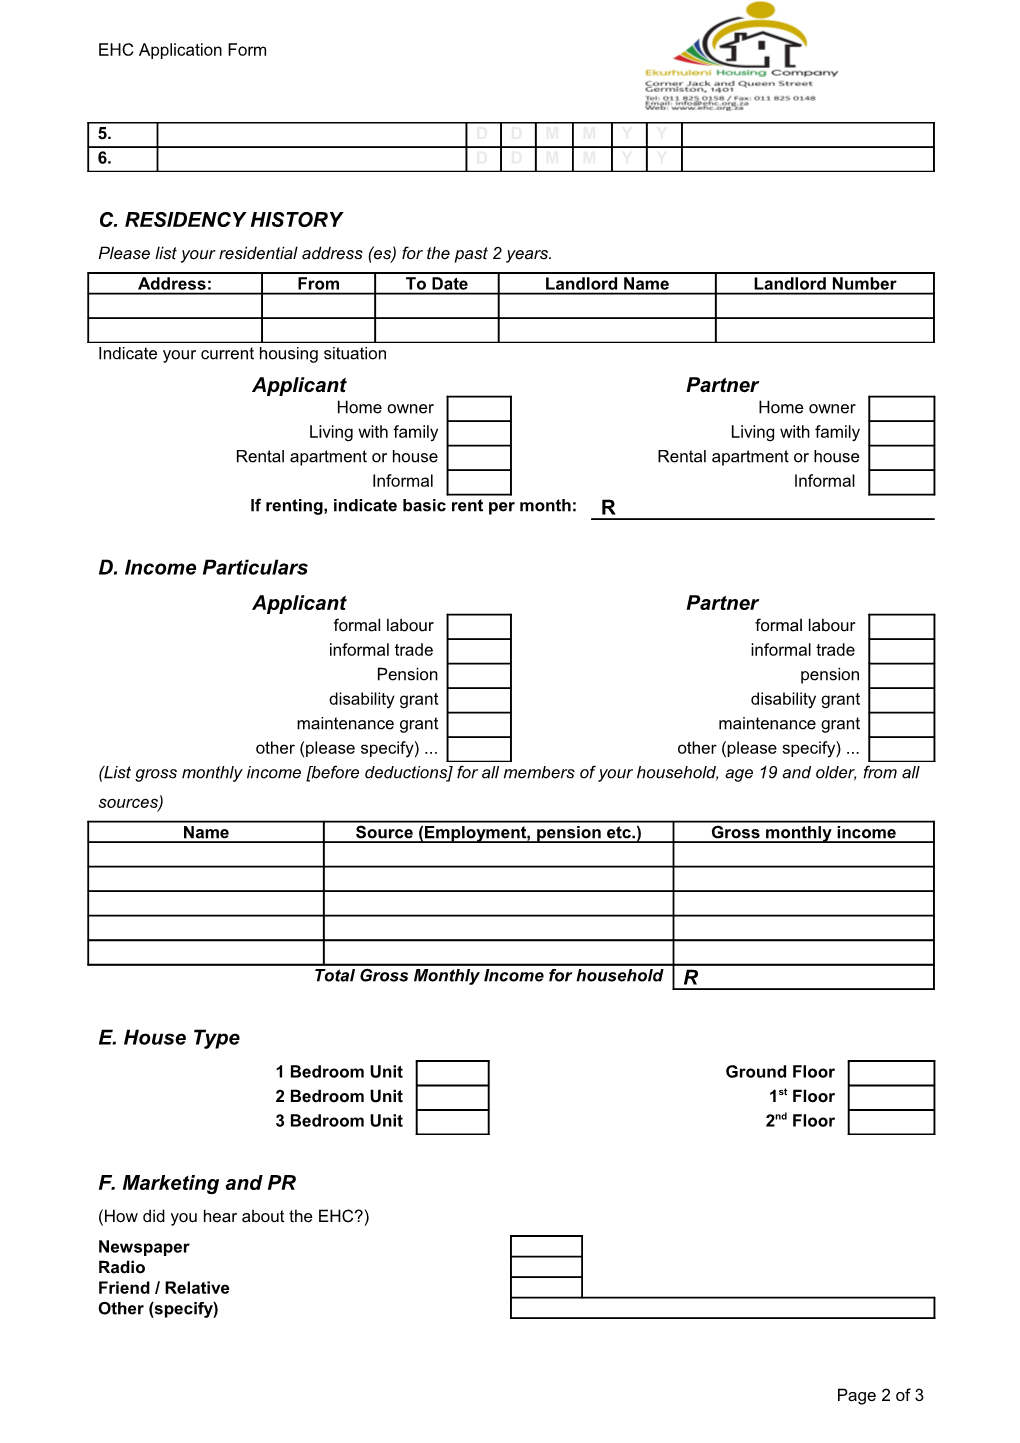 Ekurhuleni Housing Company Application Form